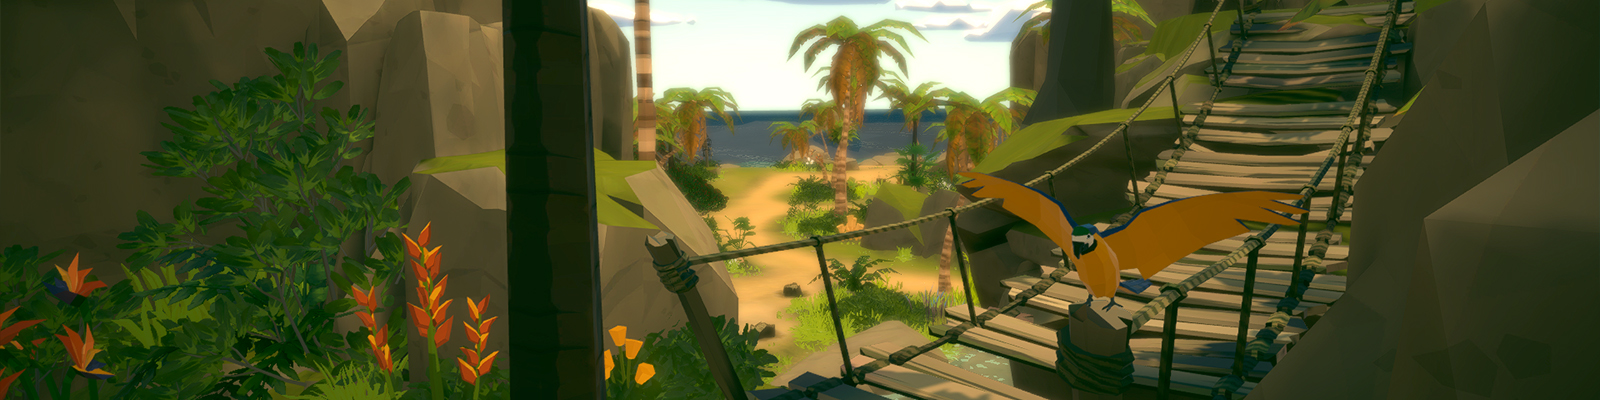 funspace jeu jolly island tir ldlc irix vr irixvr réalité virtuelle sens troyes aube